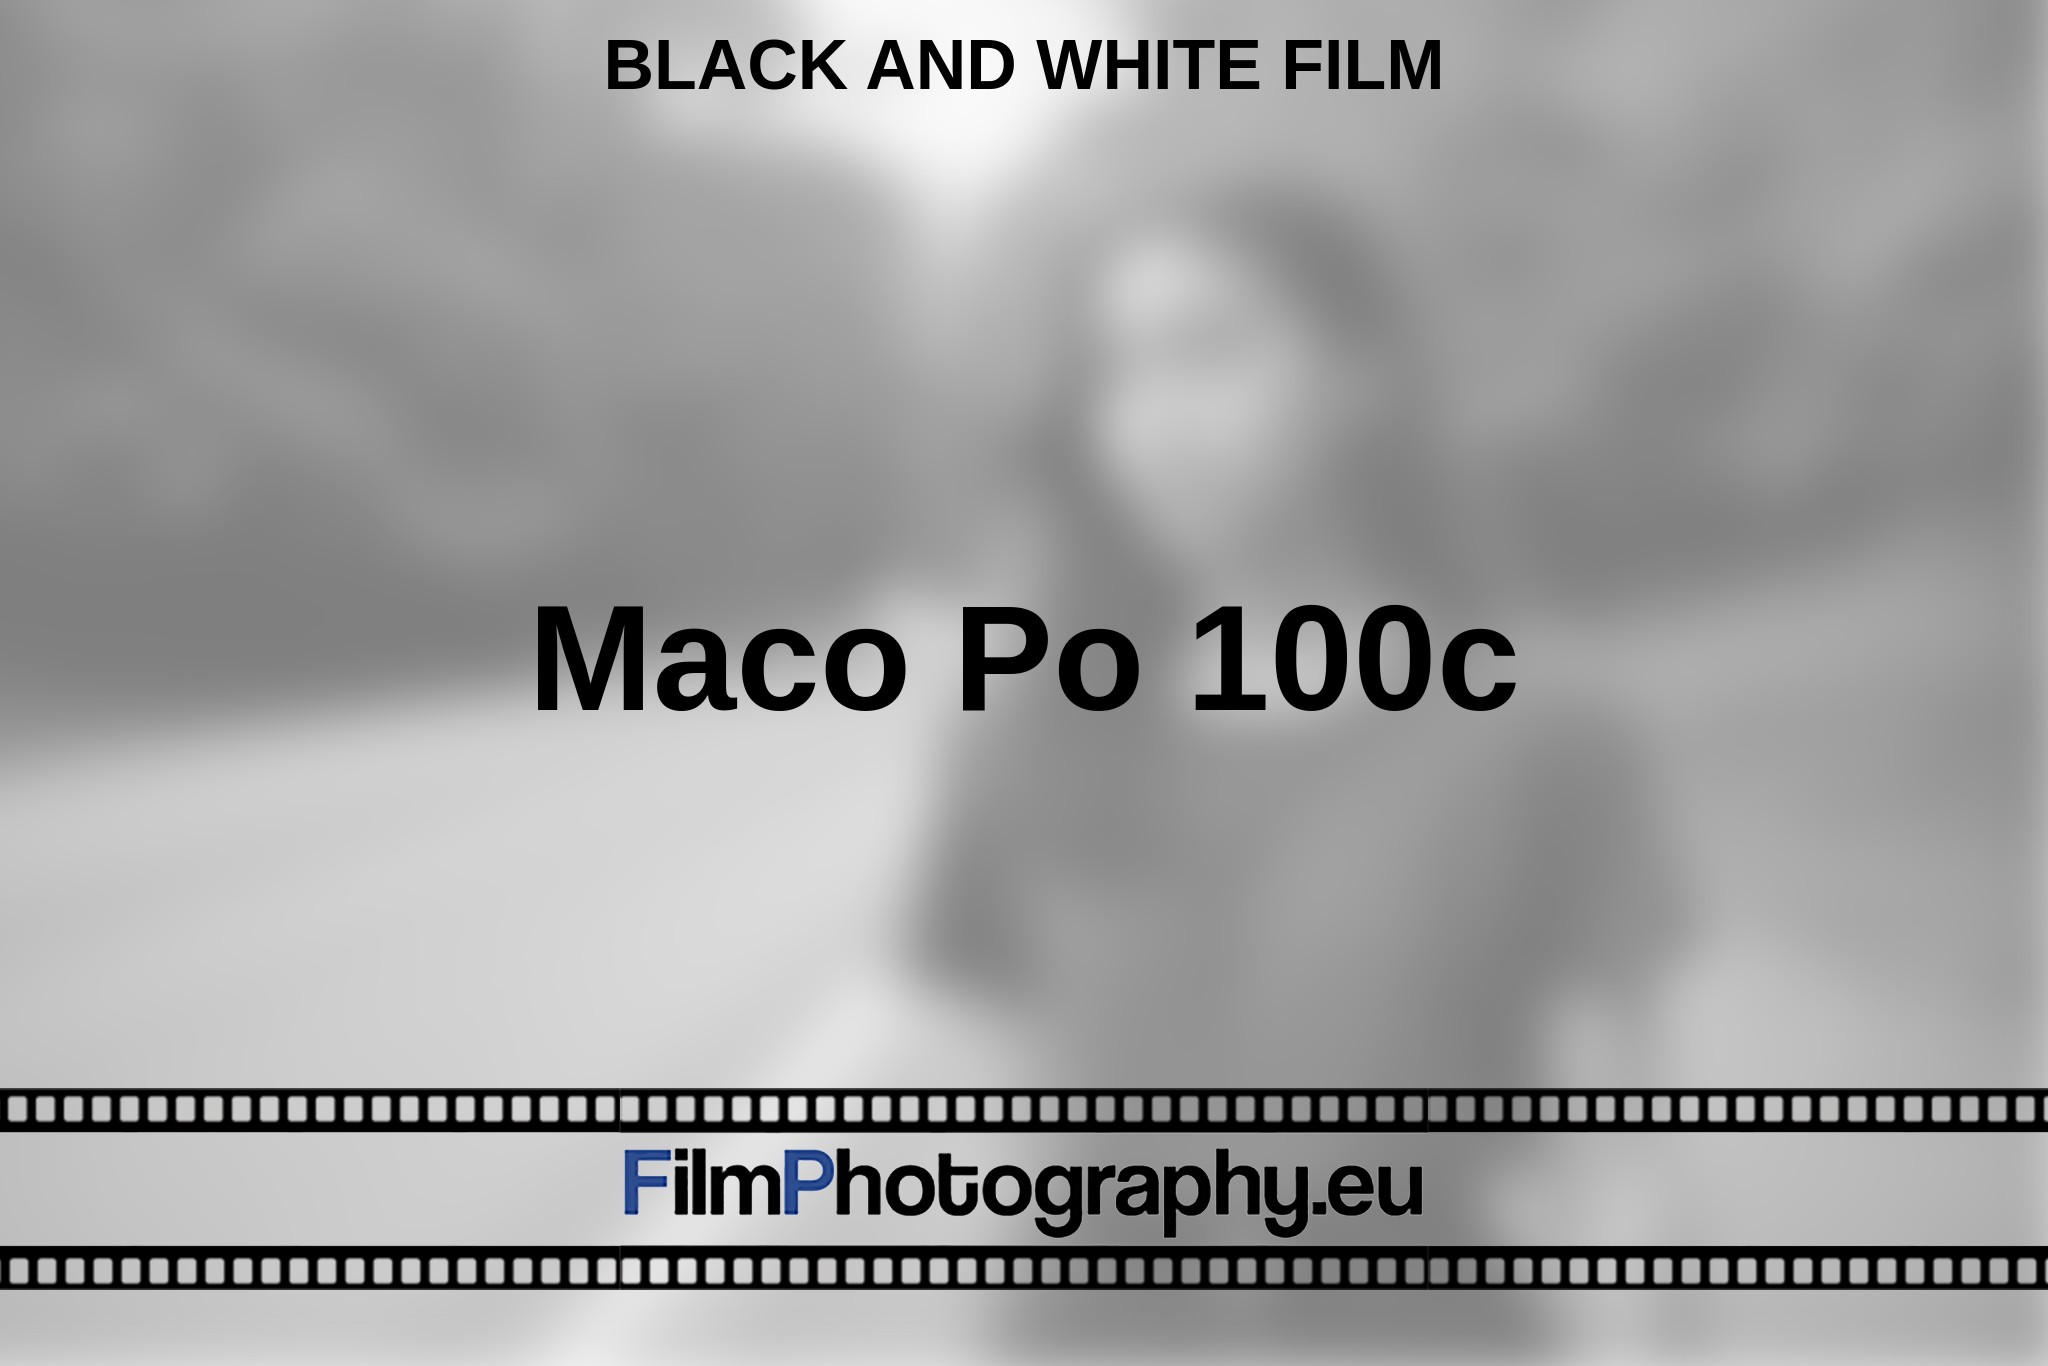 maco-po-100c-black-and-white-film-en-bnv.jpg